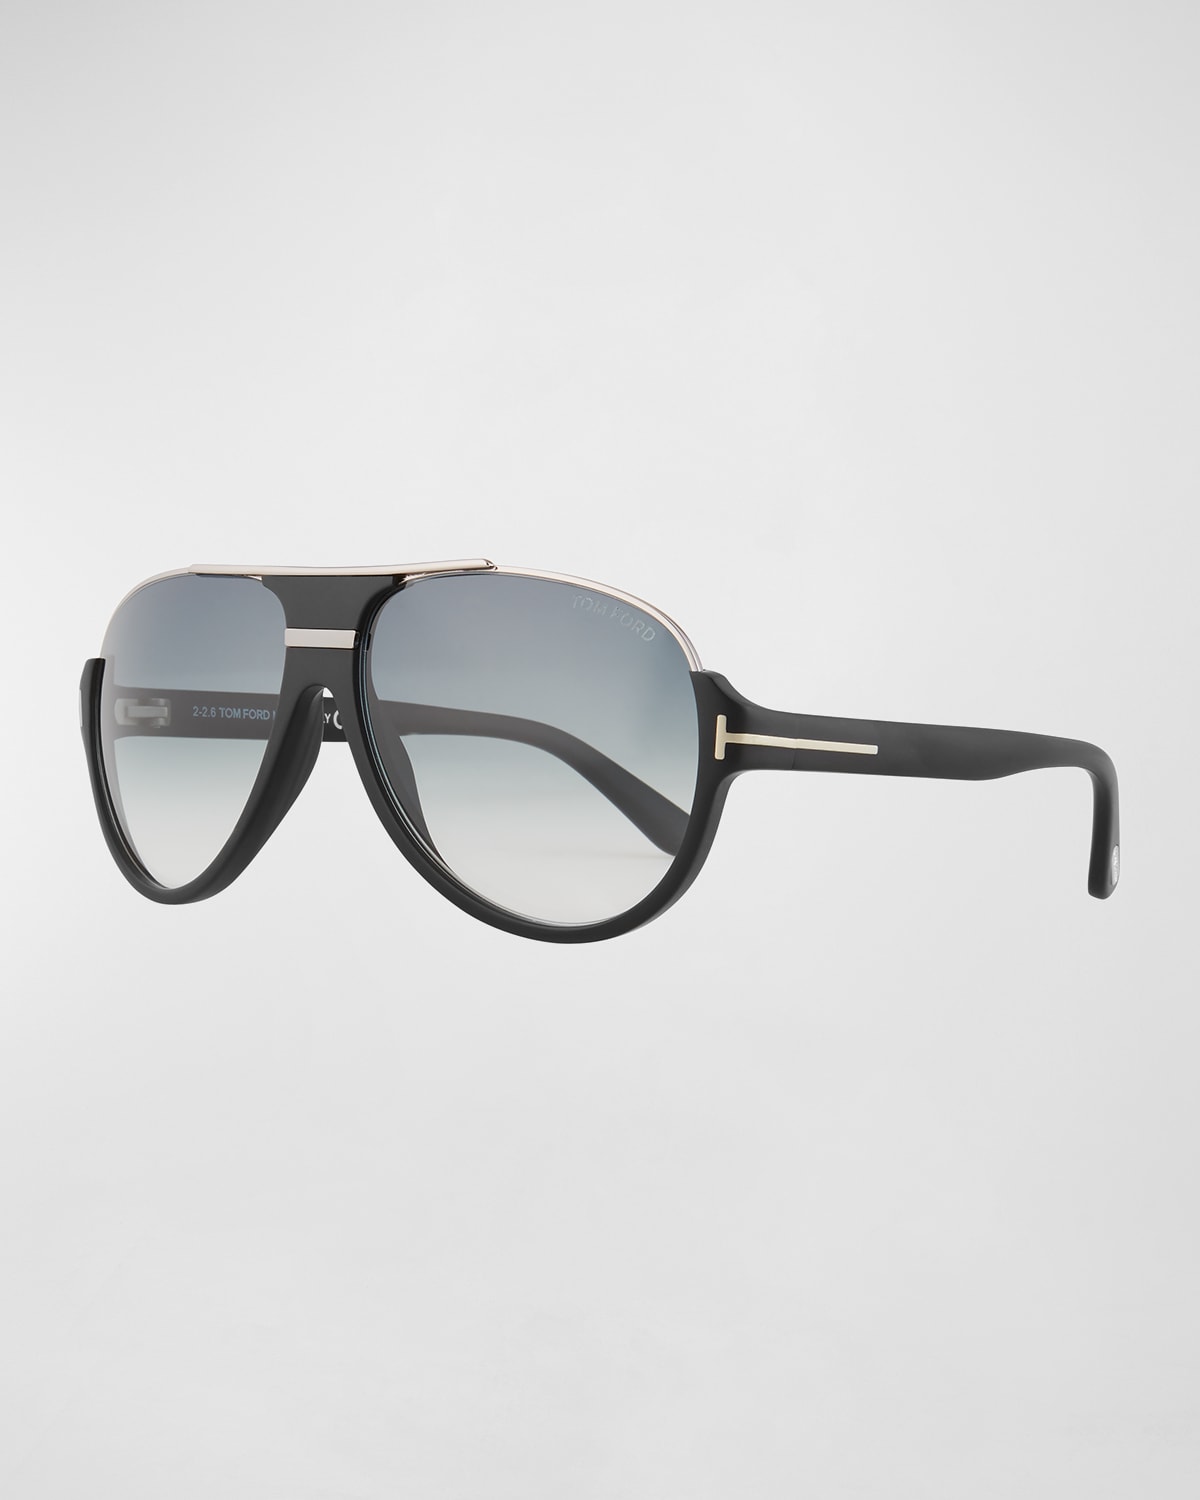 Dimitry Half-Rim Aviator Sunglasses, Matte Black/Shiny Dark Ruthenium/Gradient Blue